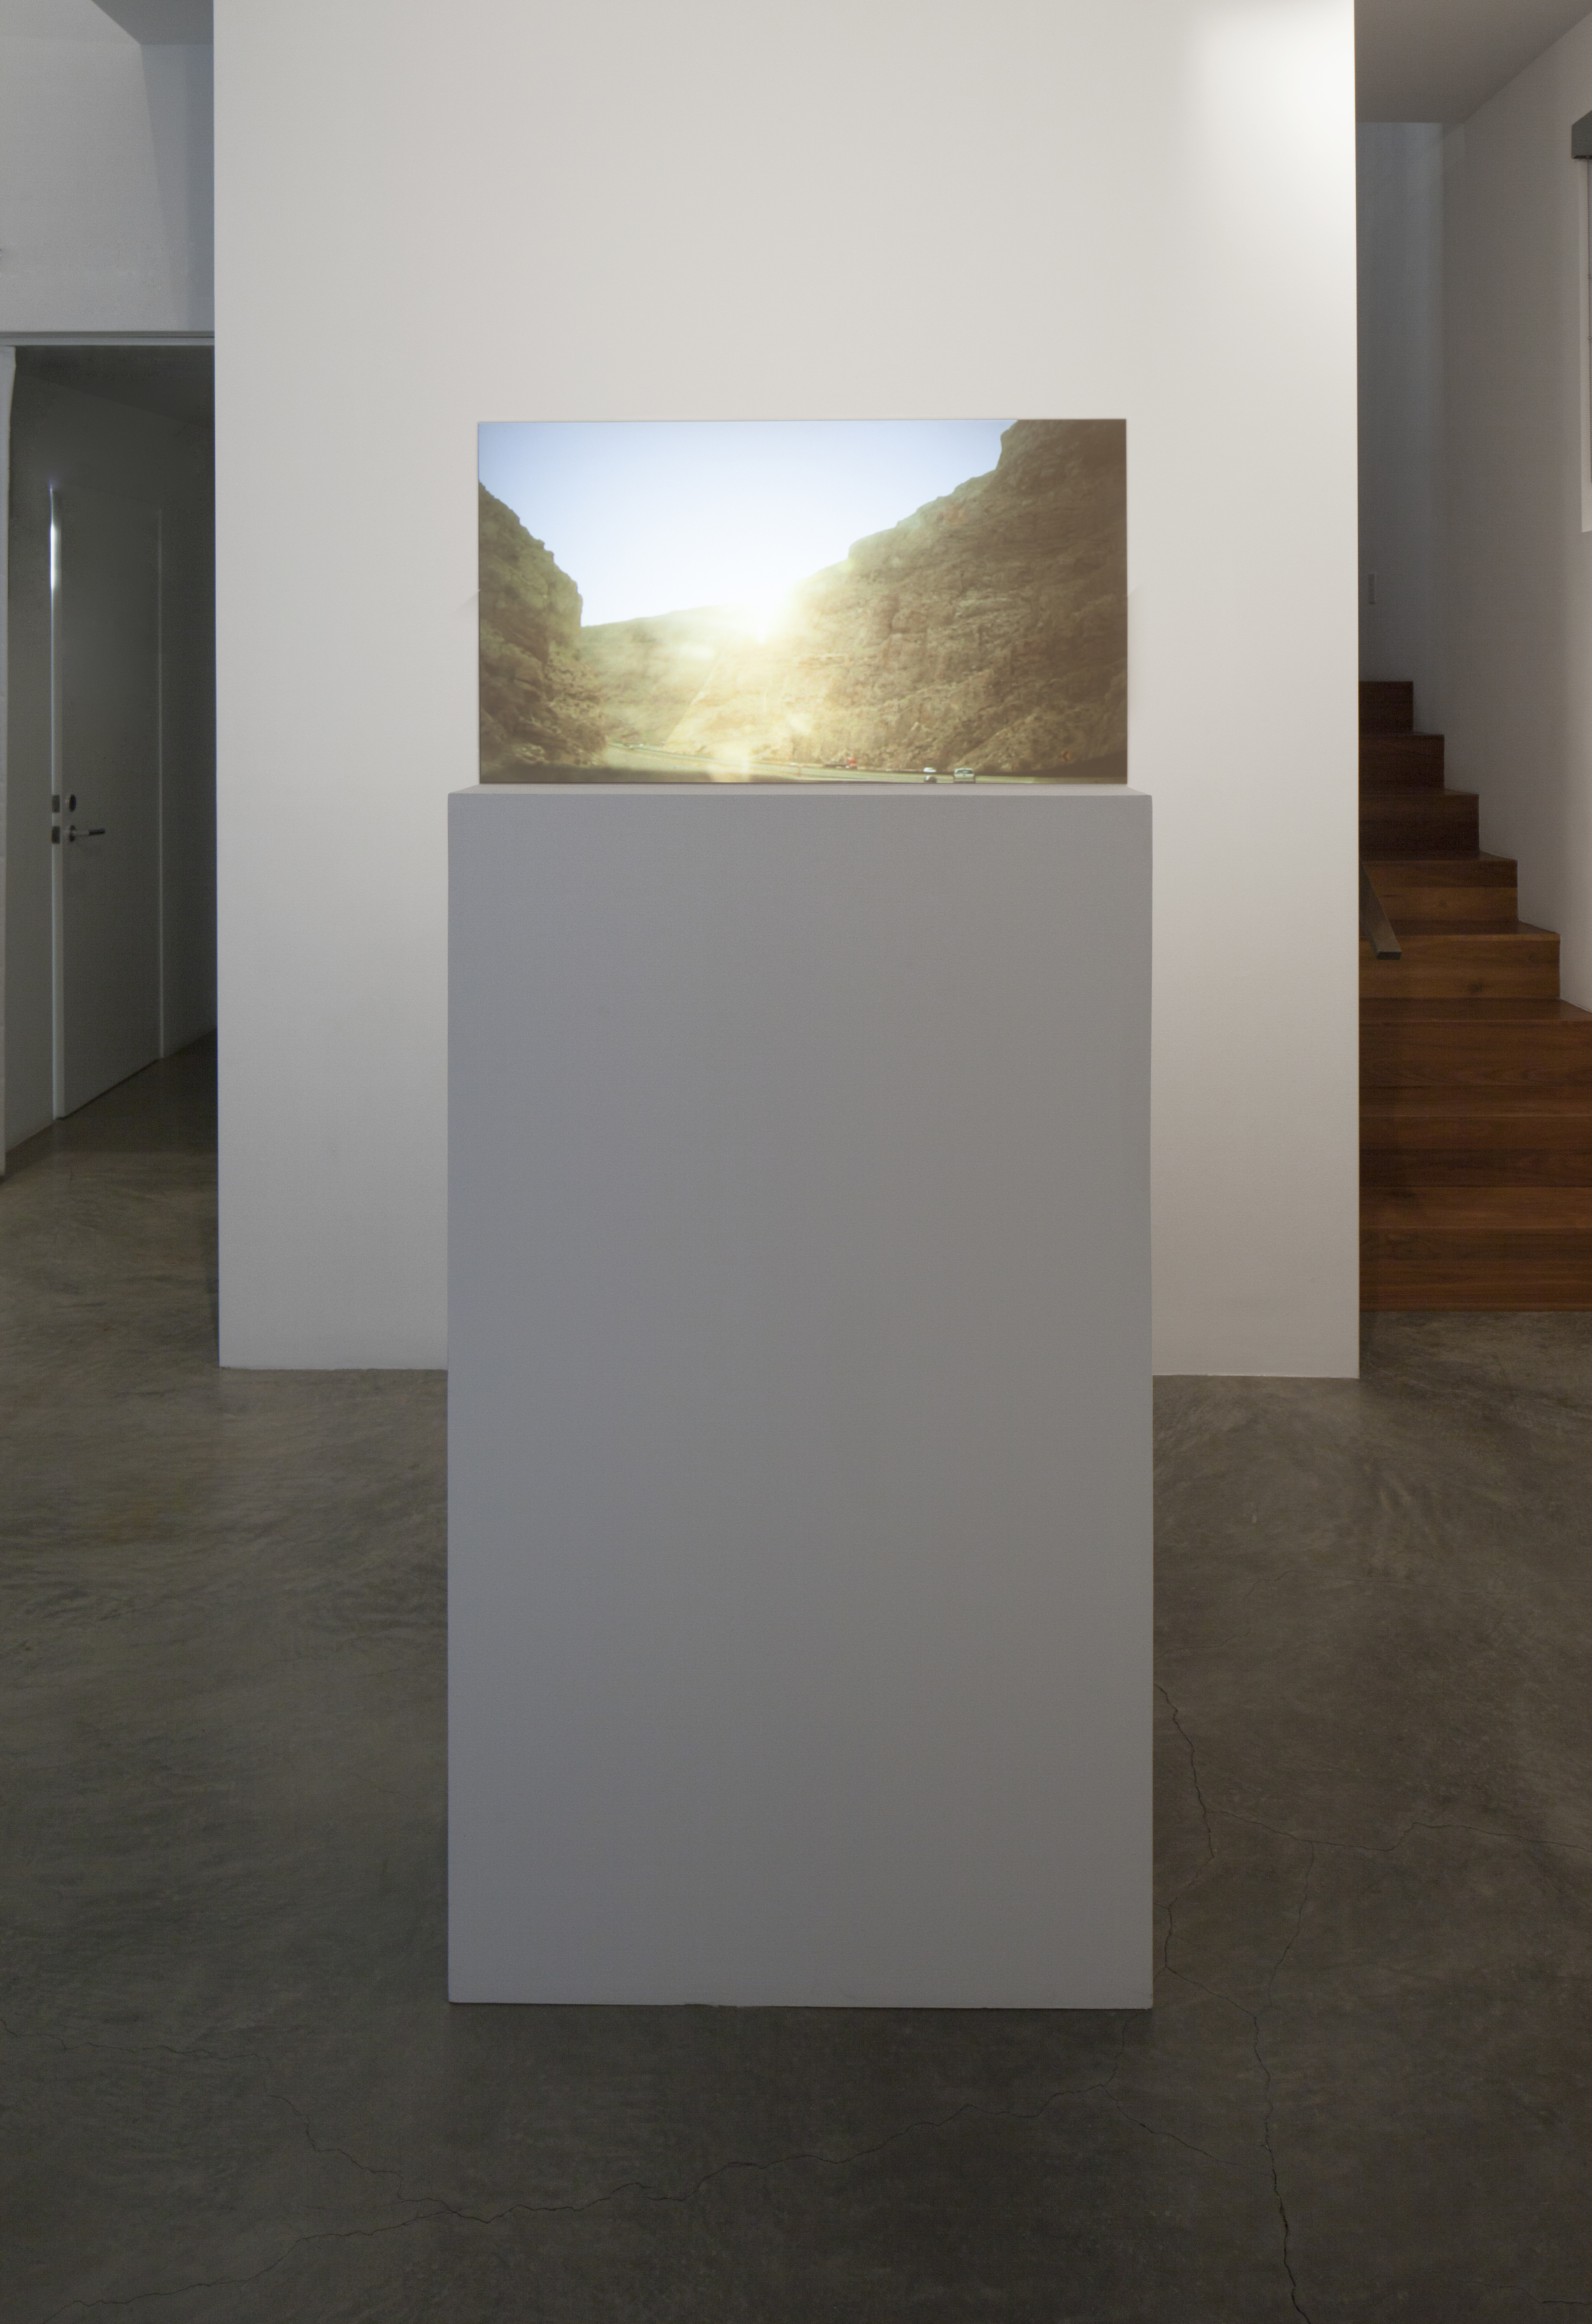  Installation View &nbsp;(Shulamit Gallery, 2014)   Prodigal Sun,&nbsp; 2013 Single Channel&nbsp;HD Video Projection onto Glass in Pedestal, No&nbsp;Sound, TRT 2:20, Looping 69 x&nbsp;30 x&nbsp;12&nbsp;Inches (Pedestal and Glass) 